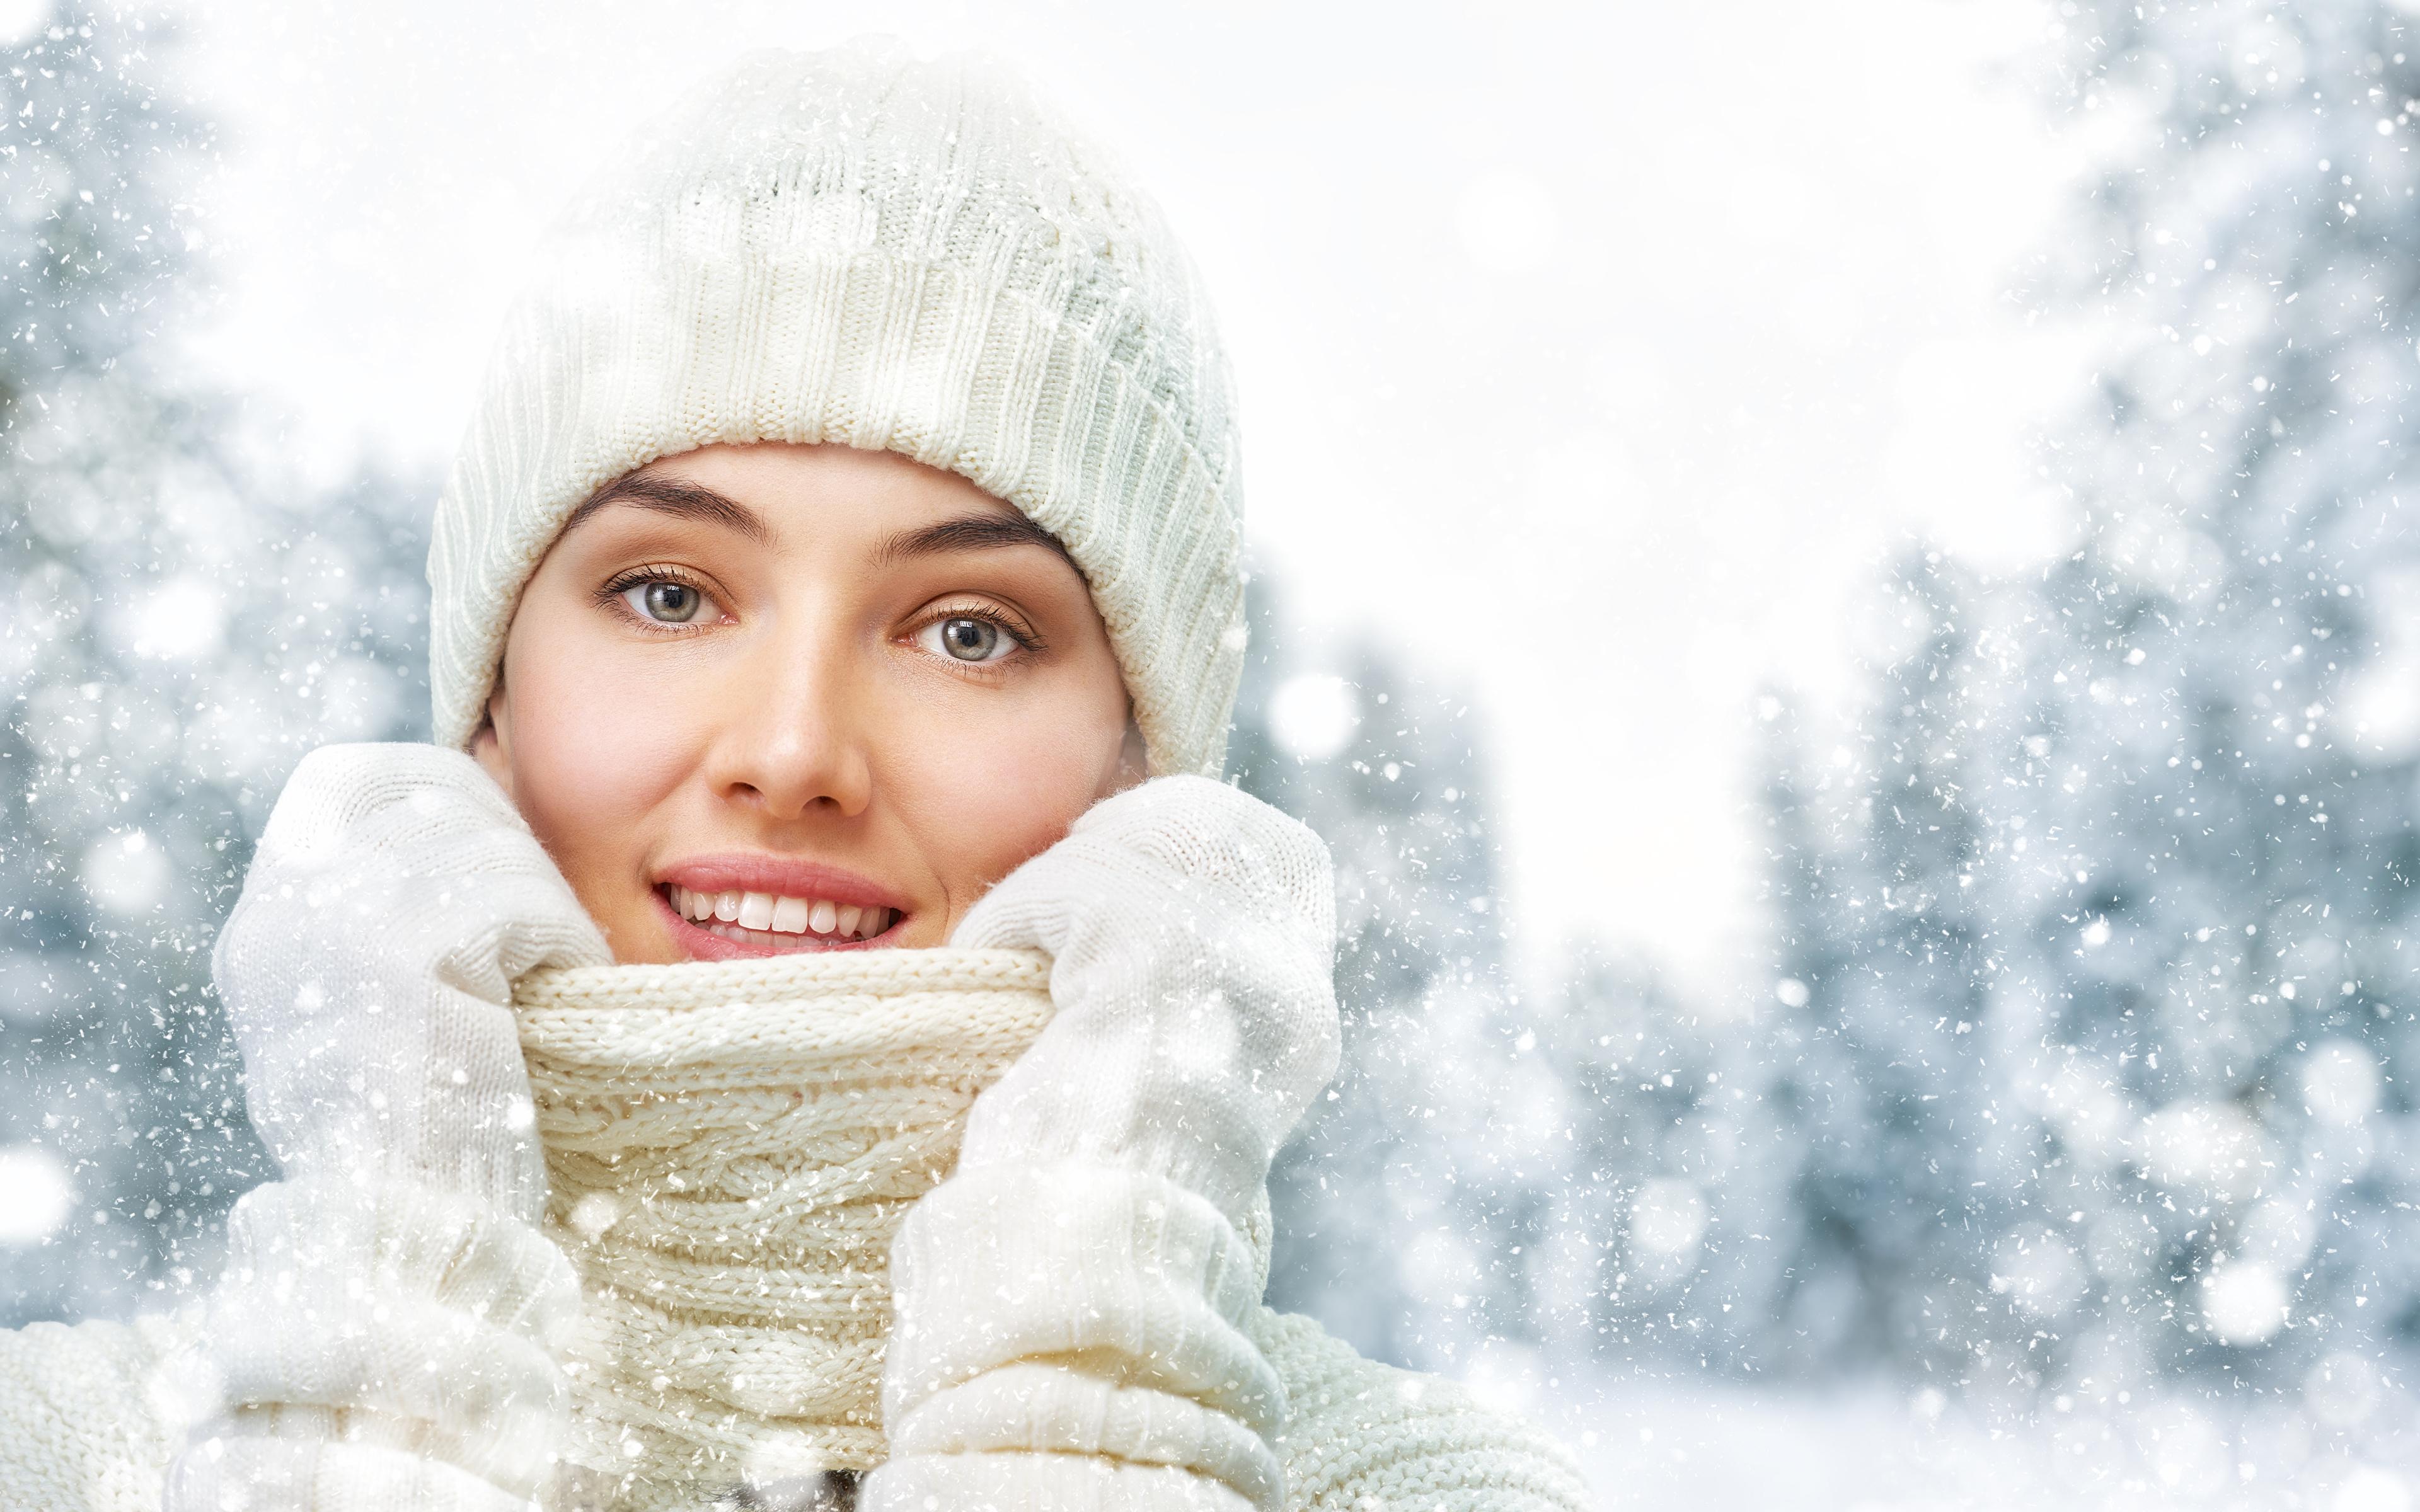 Девушка Снег Зима - Бесплатное фото на Pixabay - Pixabay